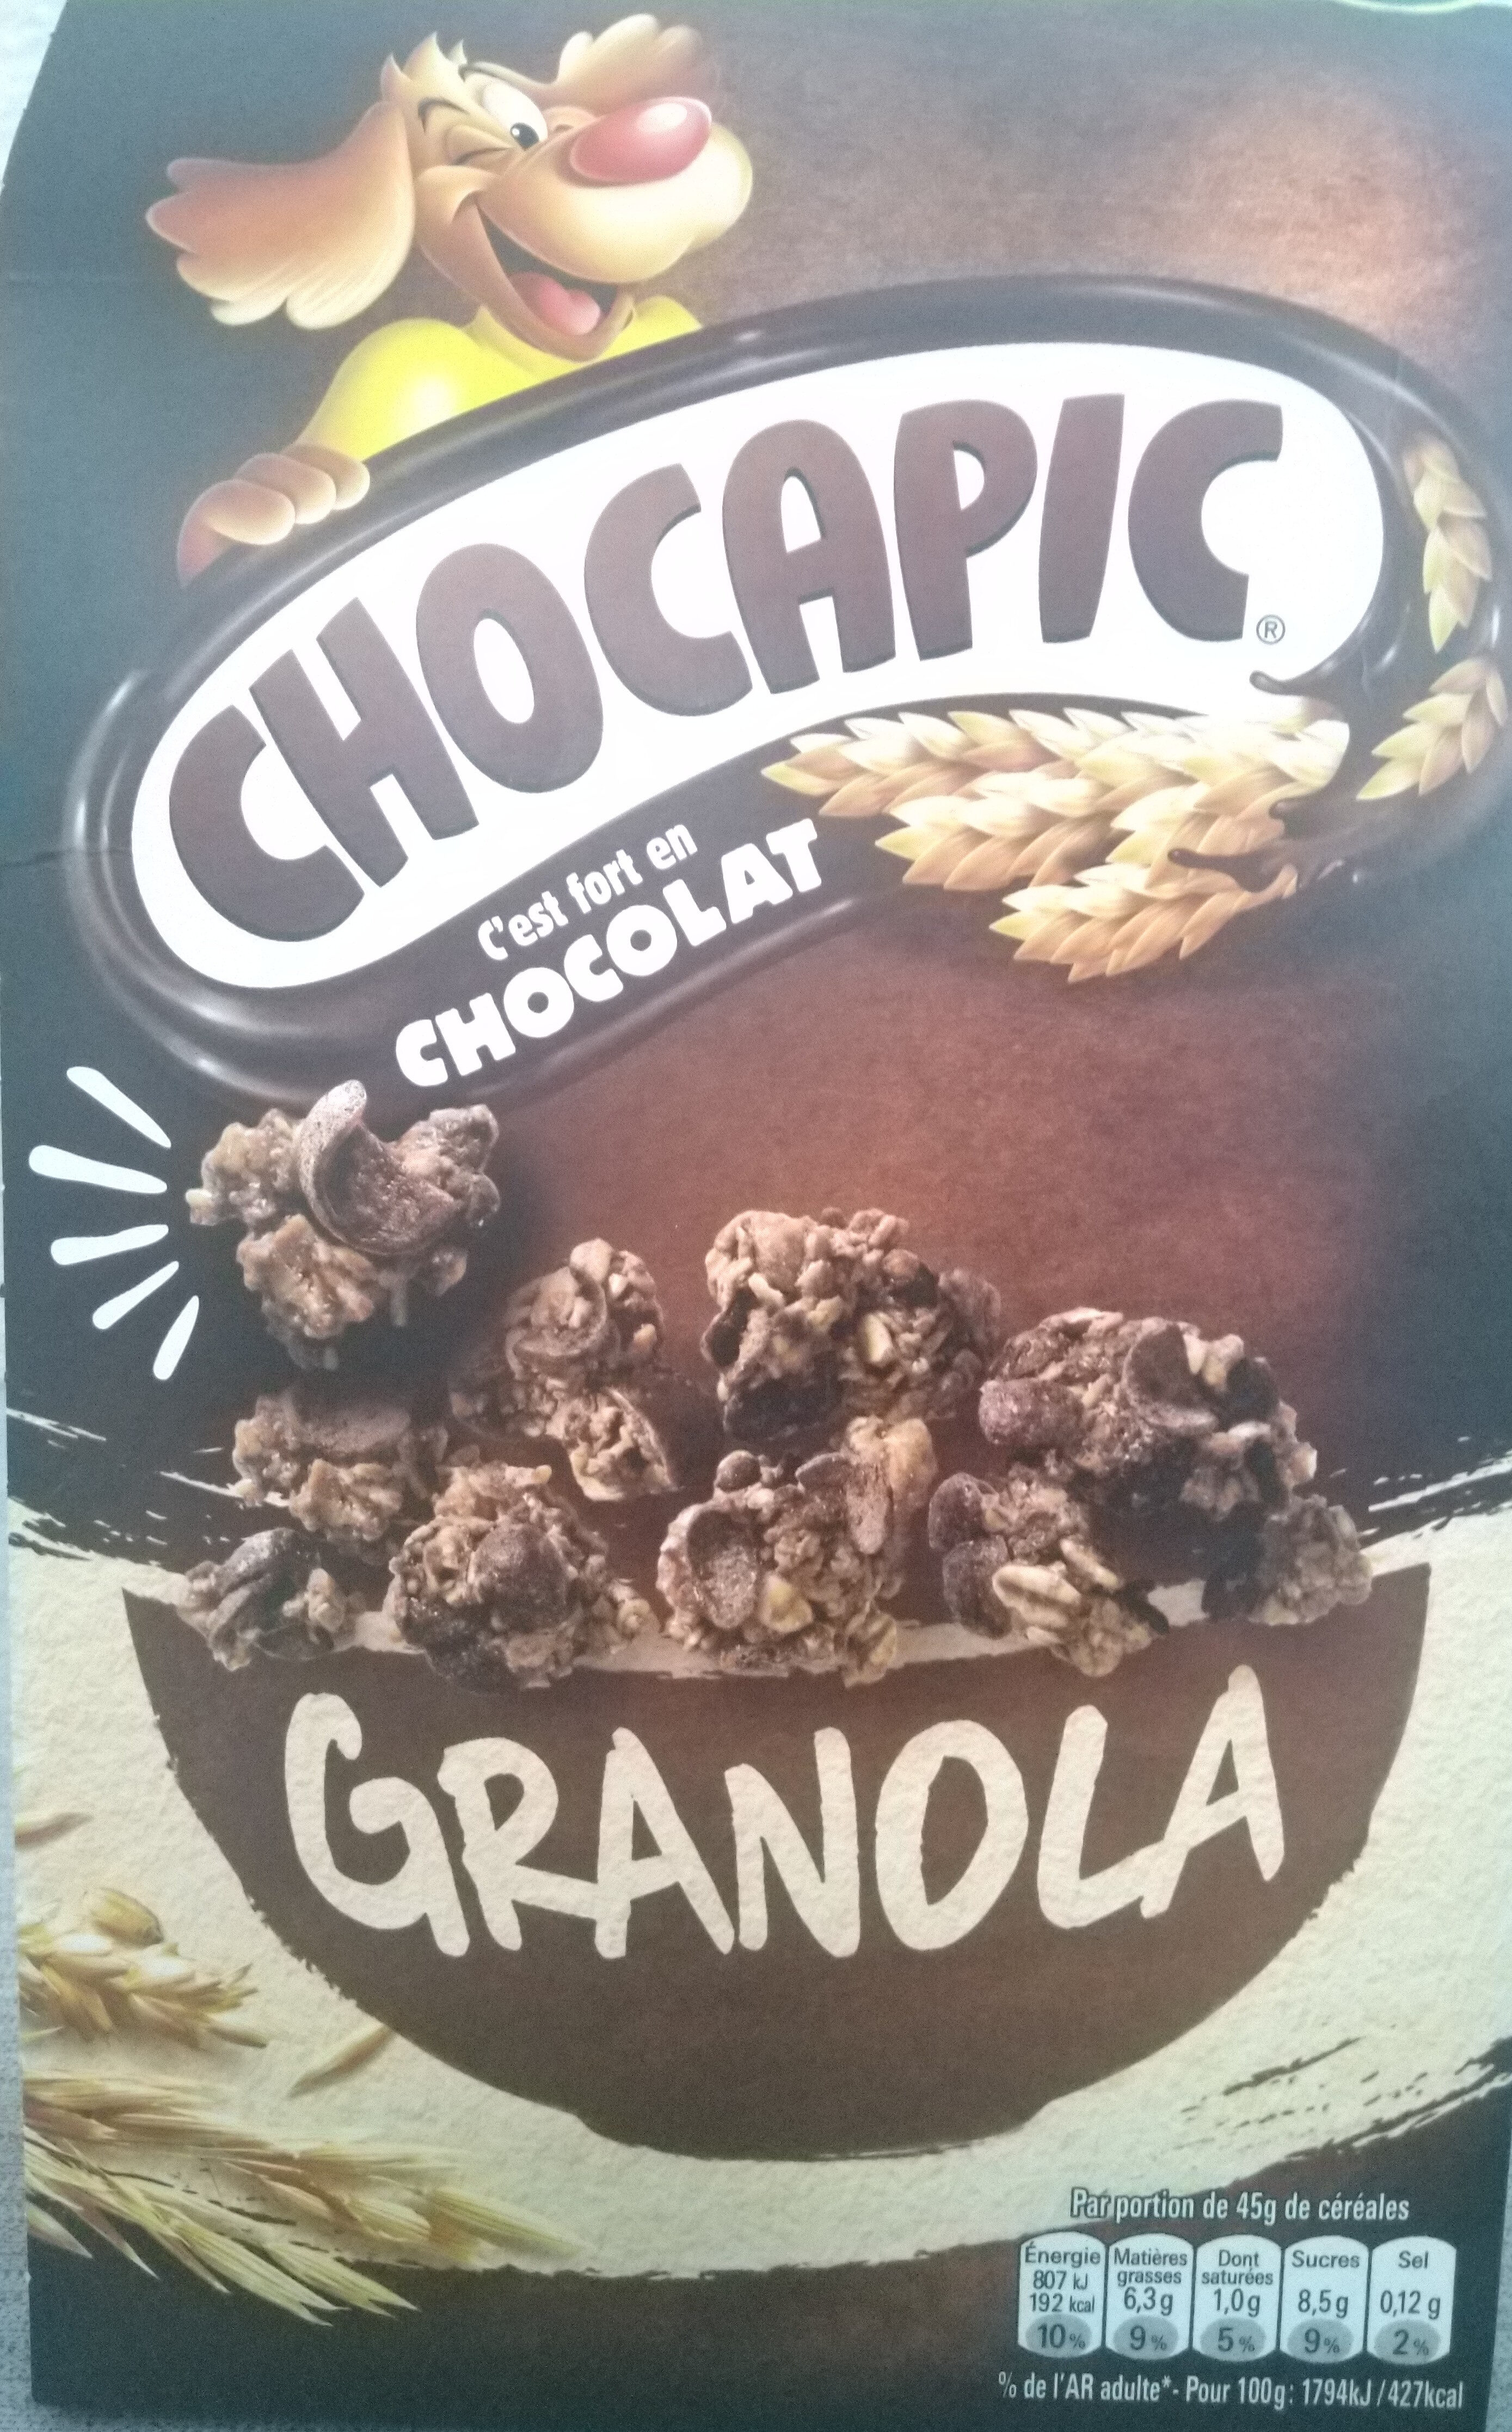 Chocapic granola - Product - fr